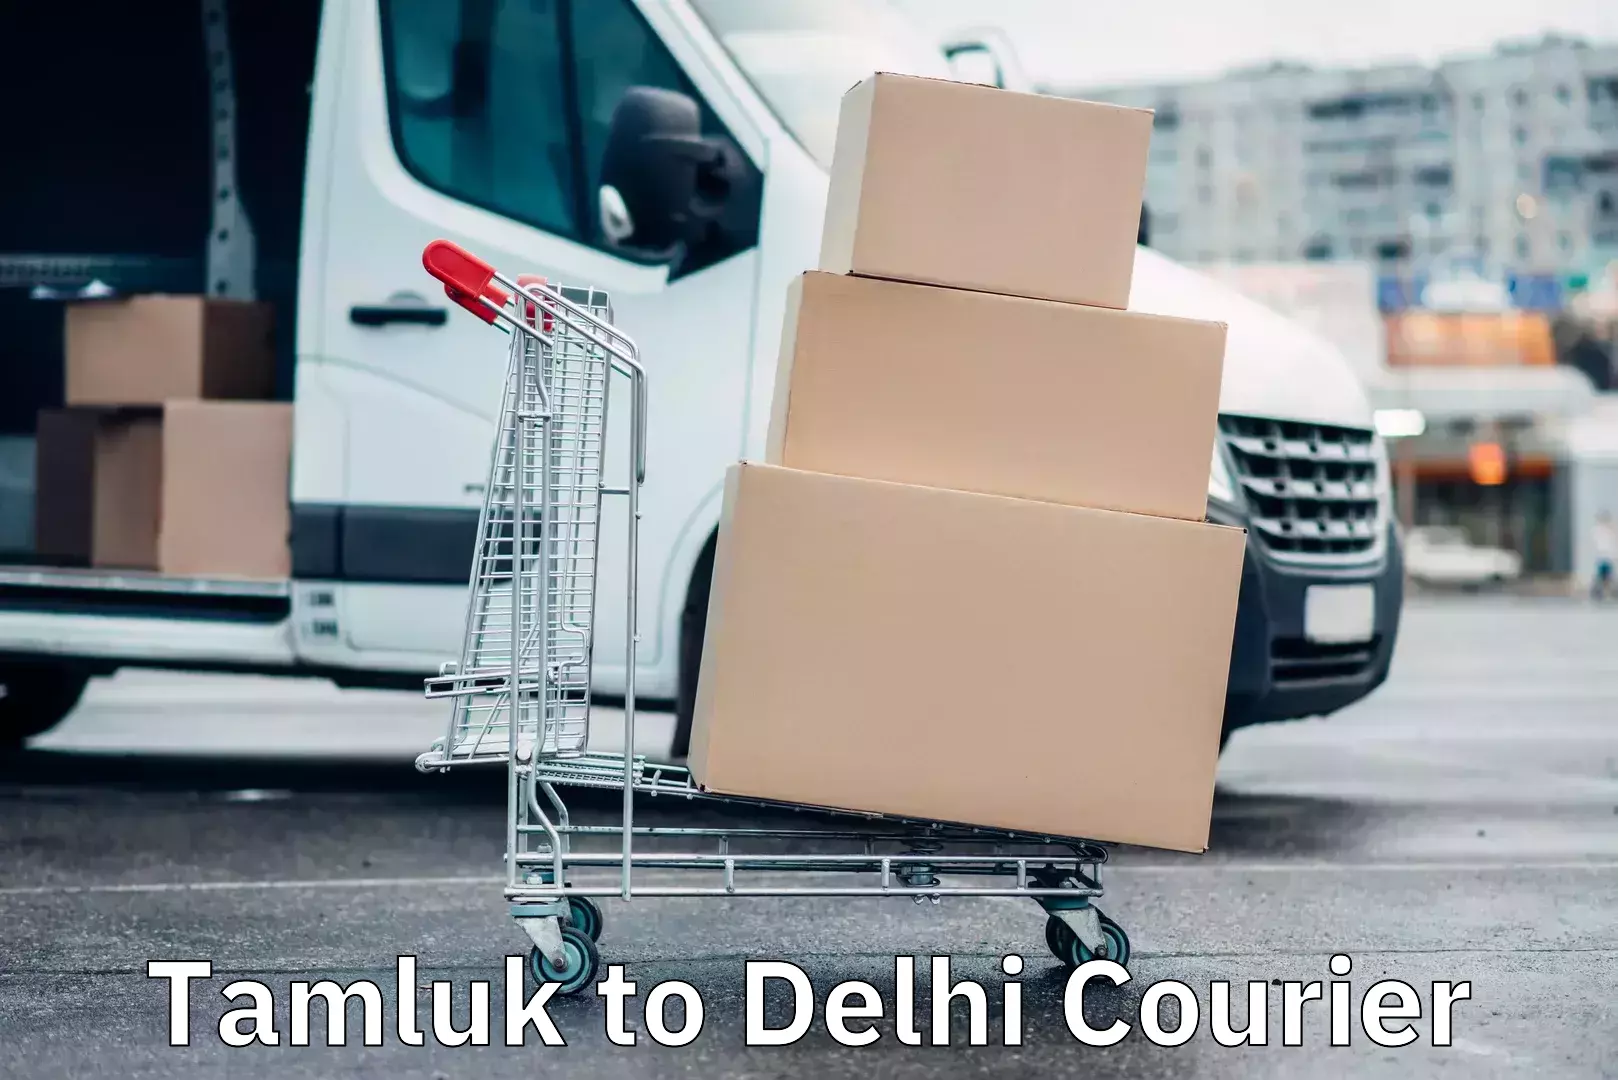 Smart shipping technology Tamluk to Delhi